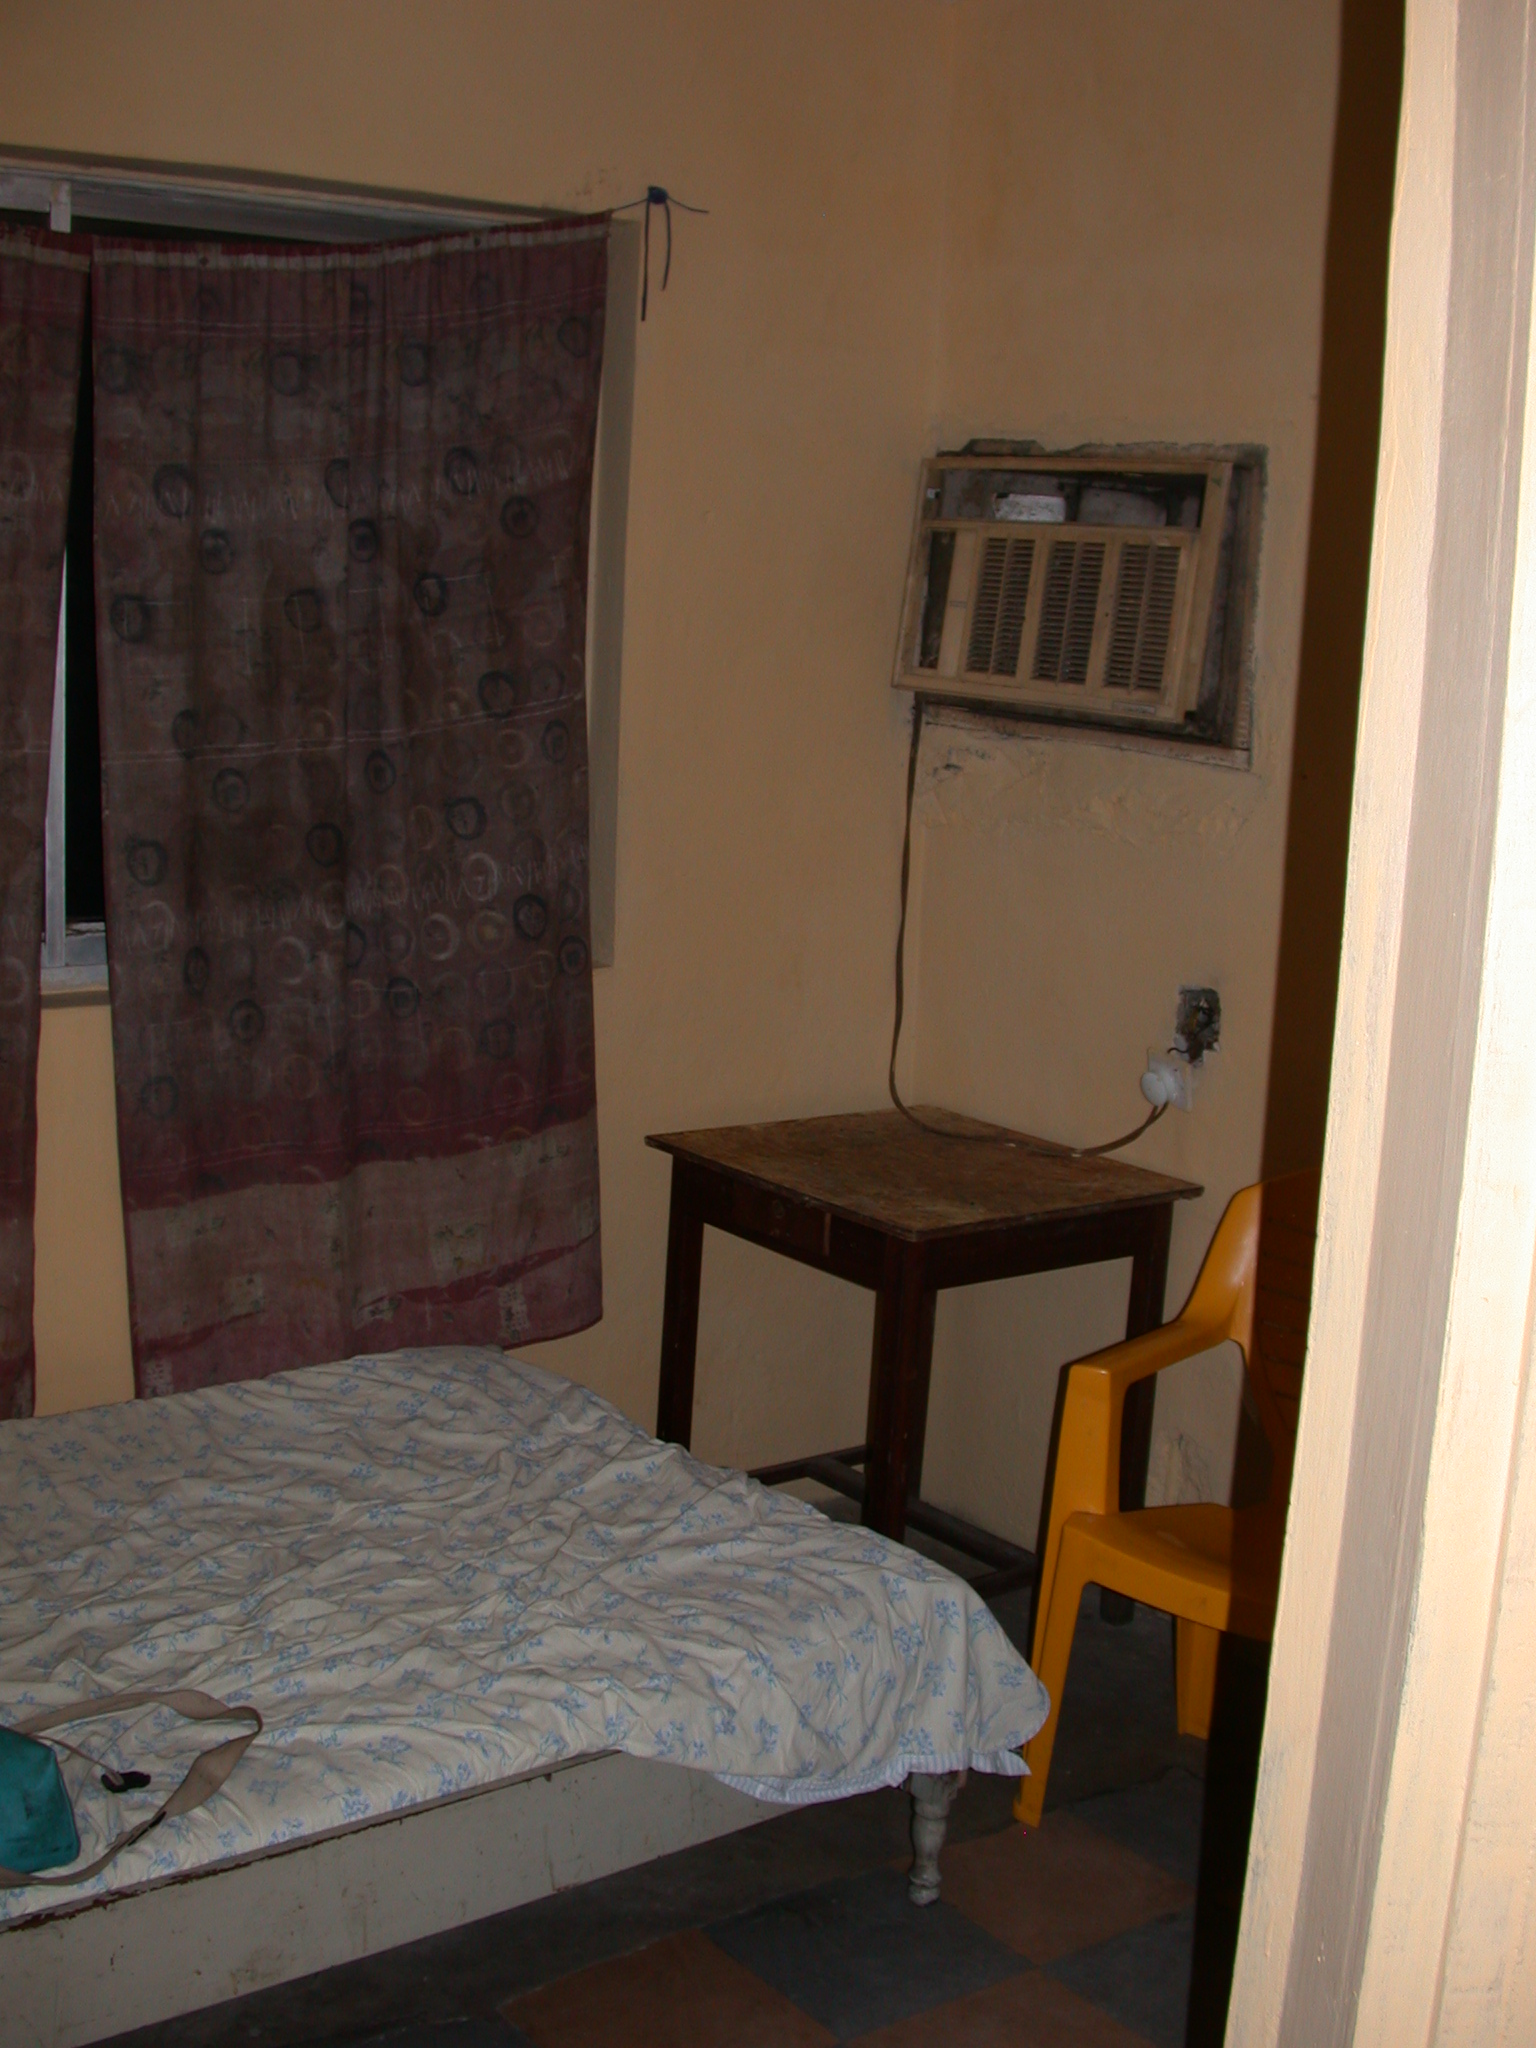 Bedroom of Hotel Room, Ritz Hotel, Lagos, Nigeria